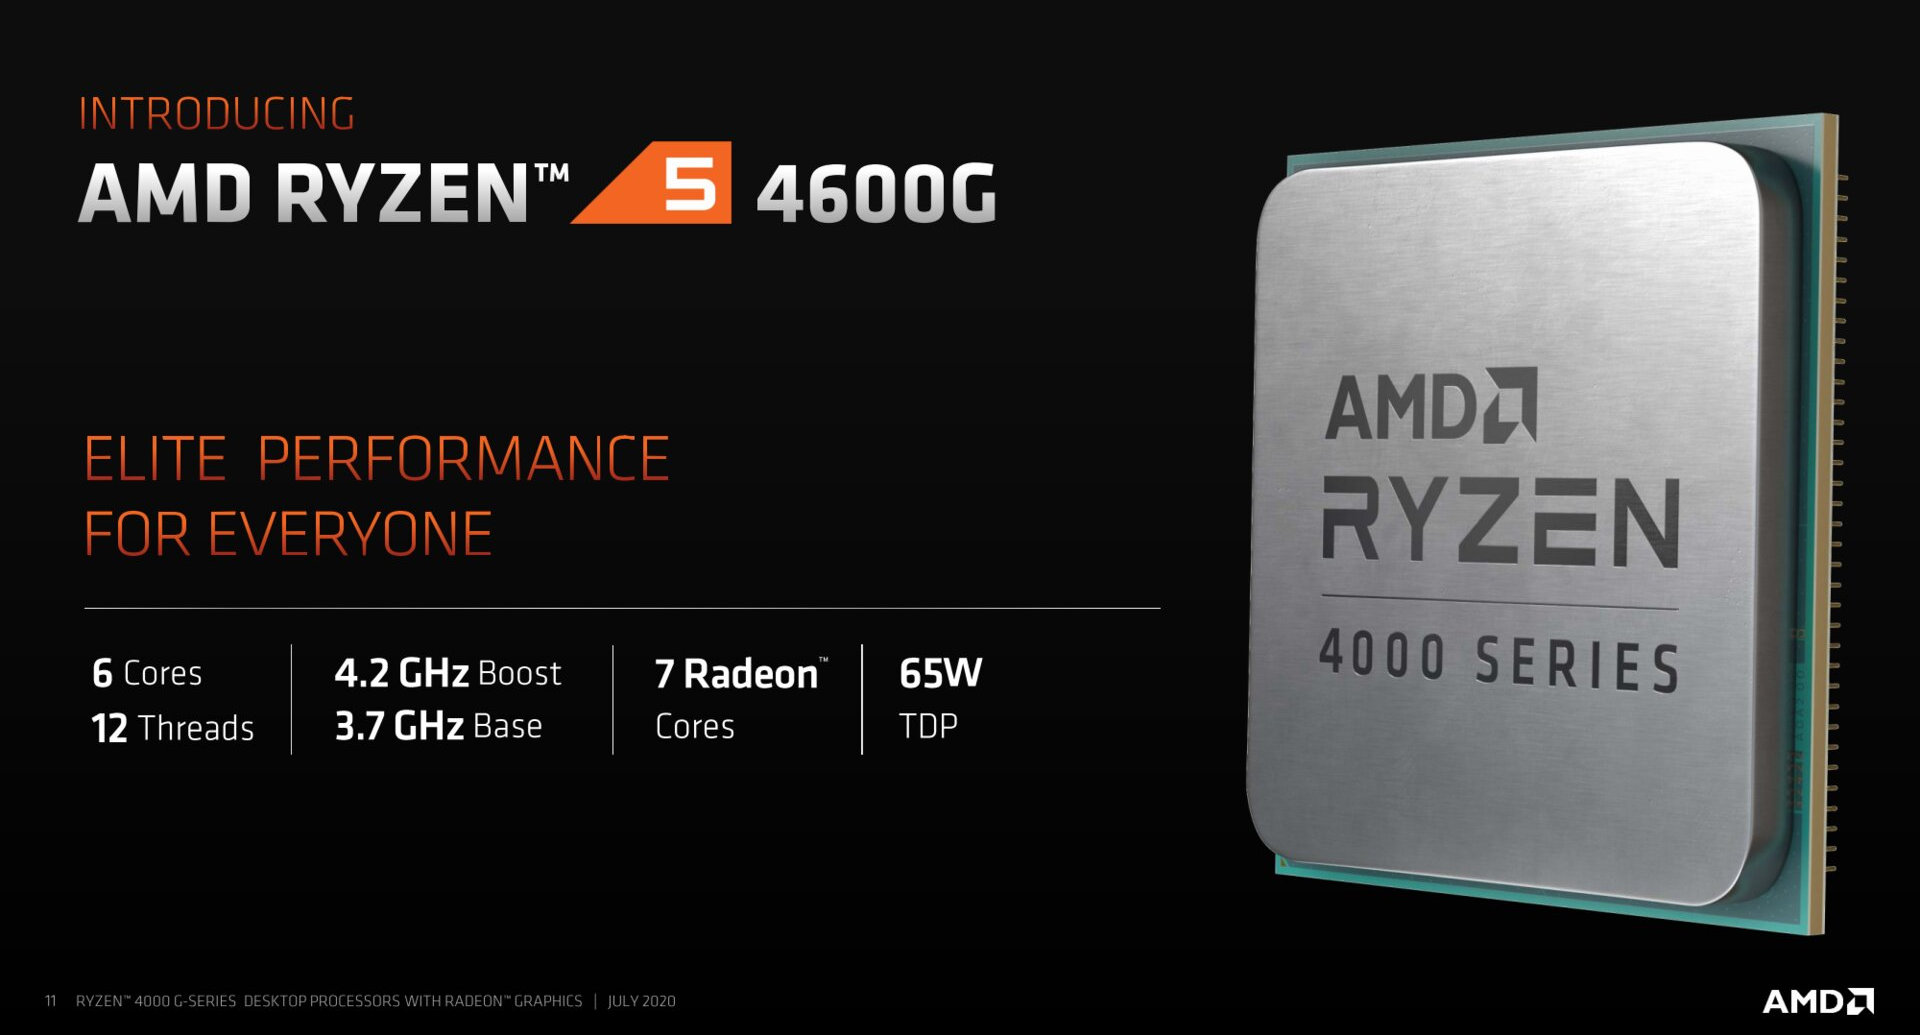 AMD RYZEN 5 4600G 6 CORES 12 THREADS DESKTOP PROCESSOR